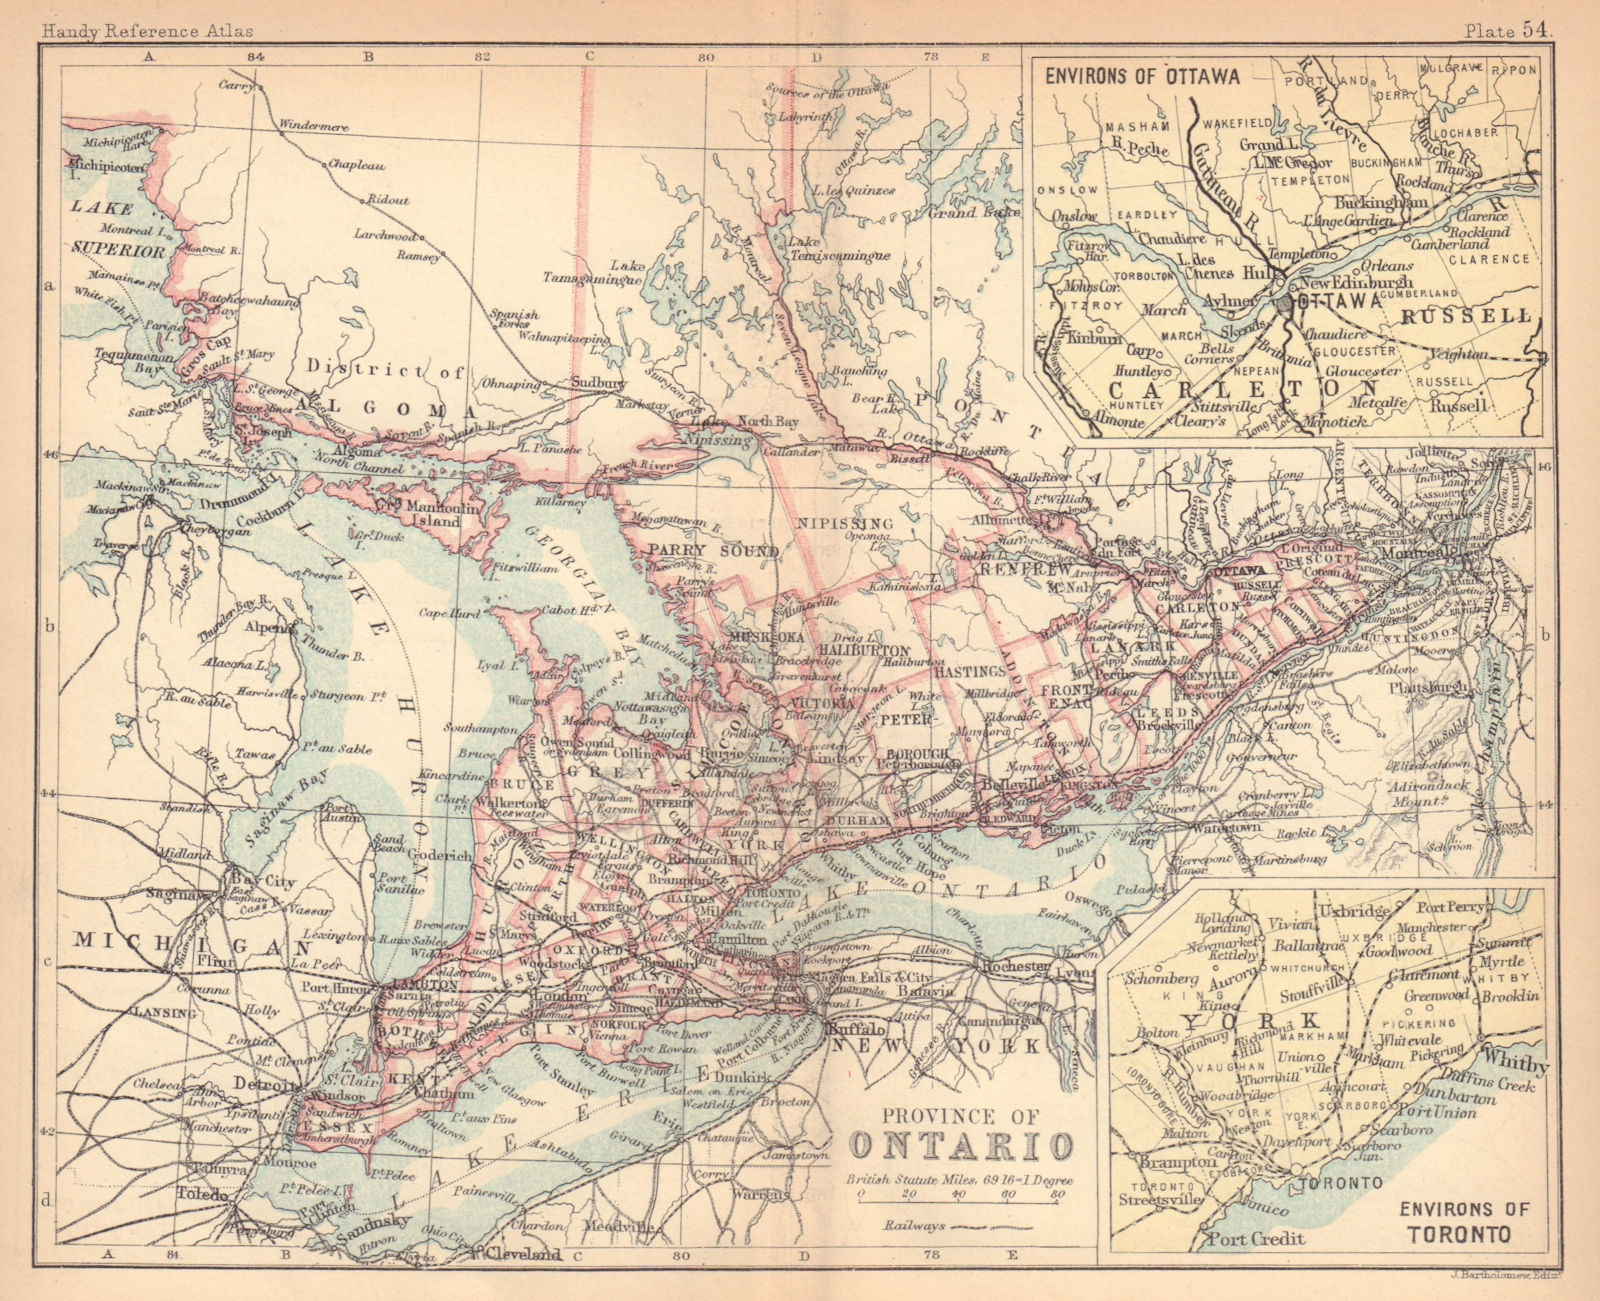 Associate Product Ontario Province. Ottawa & Toronto environs. Canada. BARTHOLOMEW 1888 old map